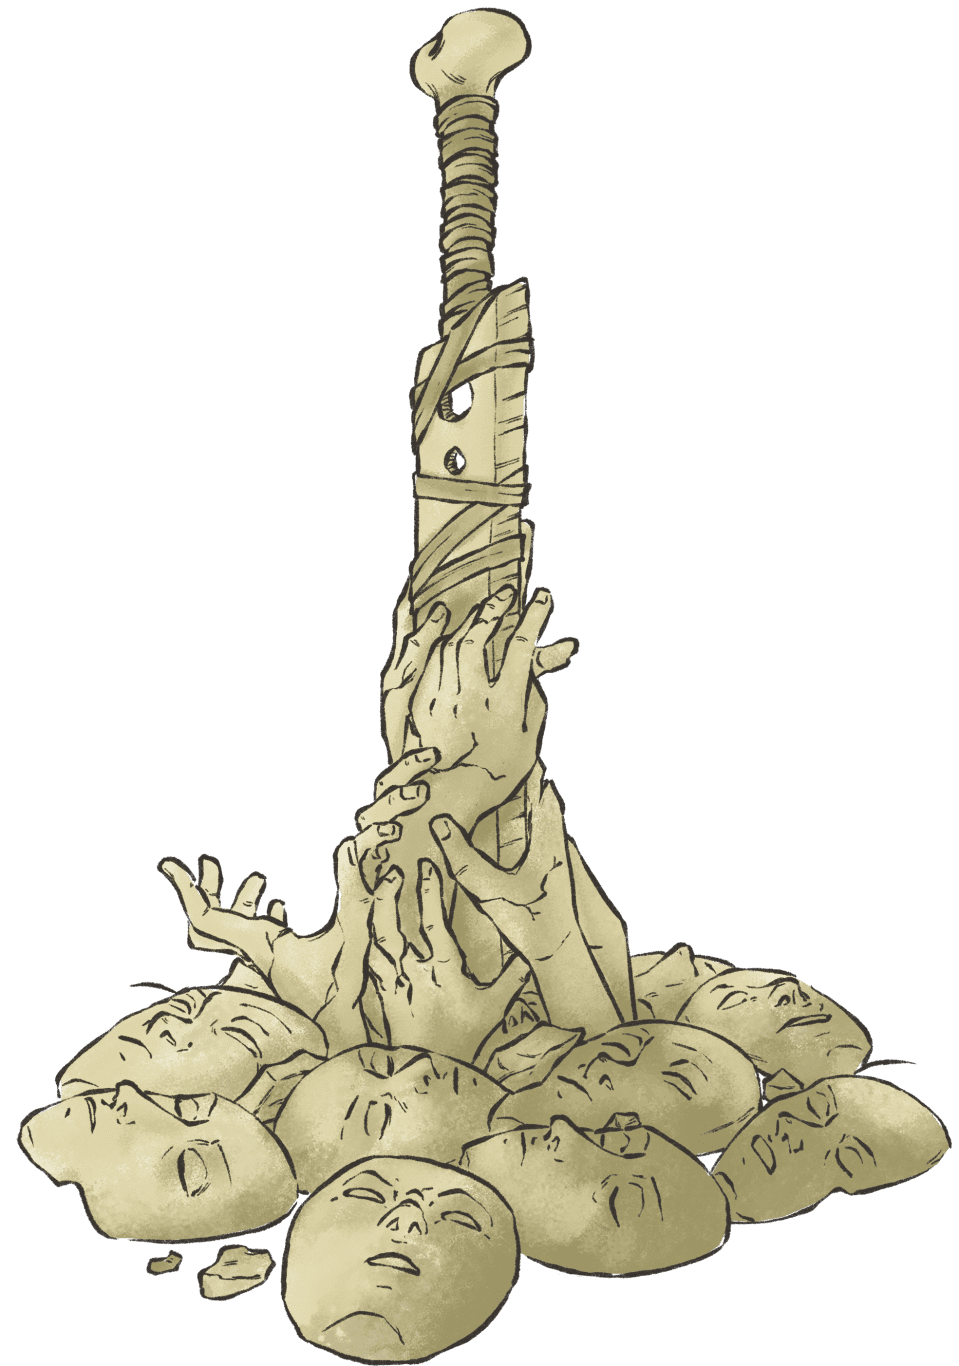 Bone sword illustration by InkOfViolet